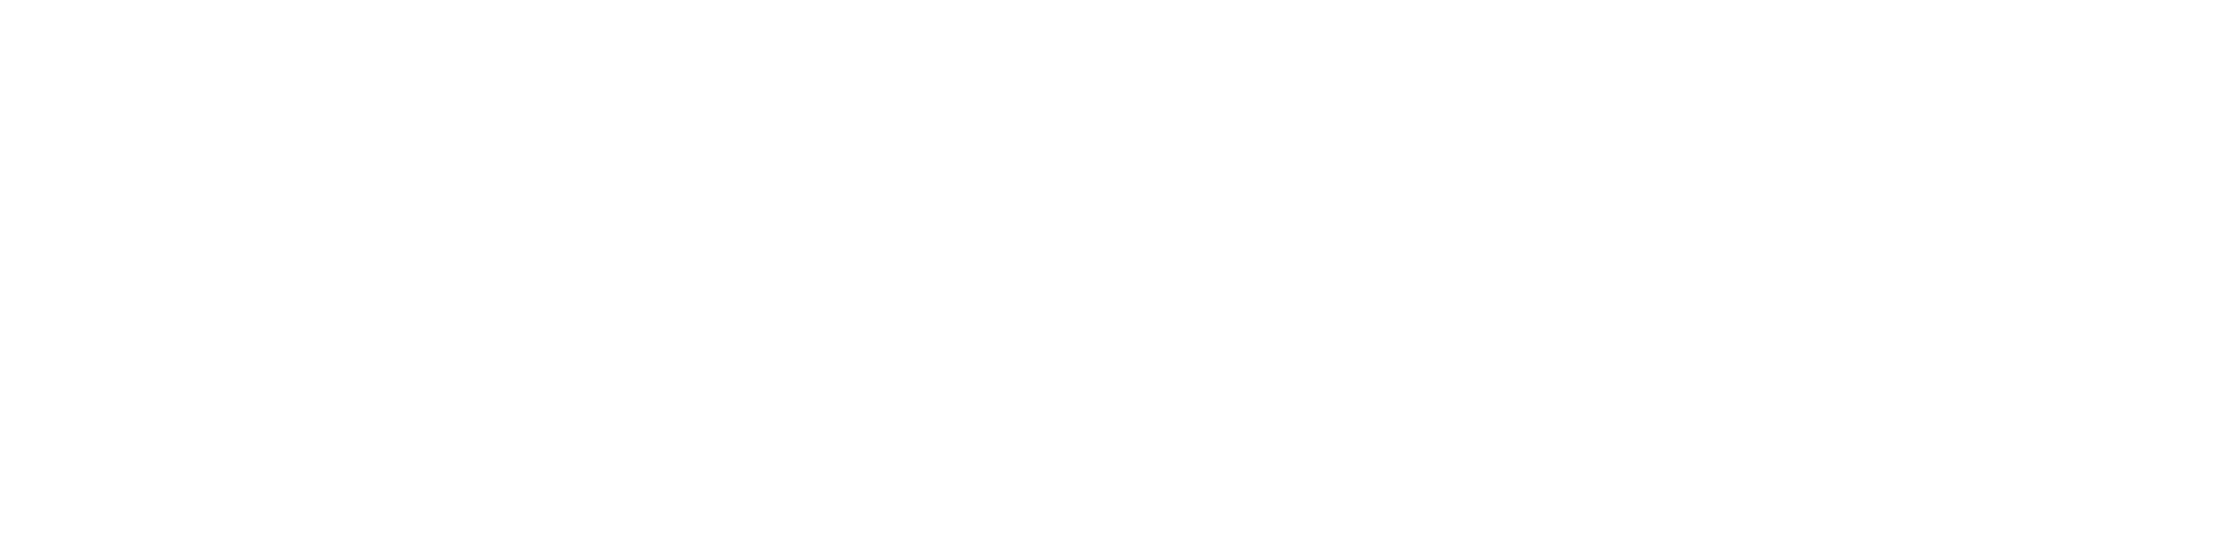 Meth-web-long-2220x540-urban-herbery-logo-designs-w